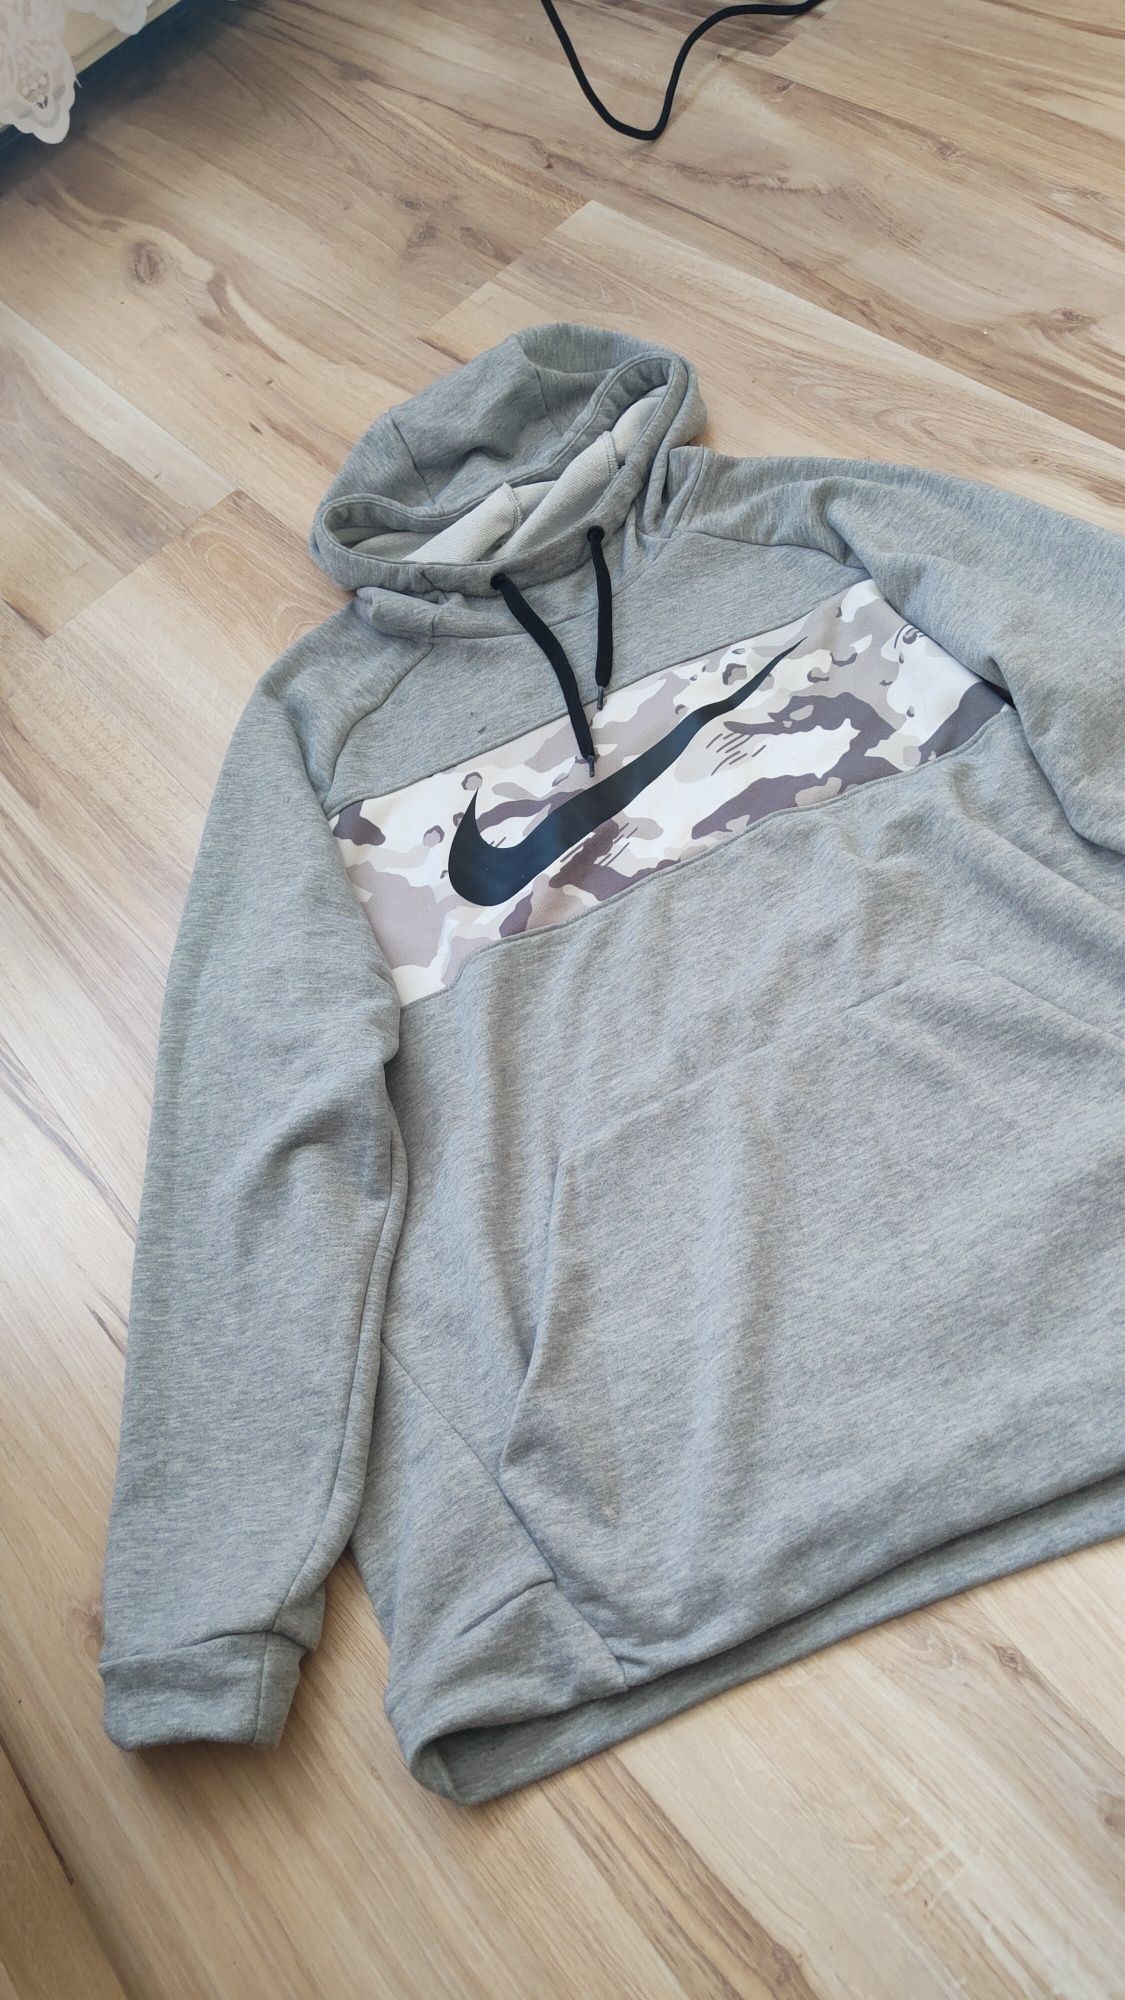 Męska bluza Nike 42 XL szara moro oryginalna